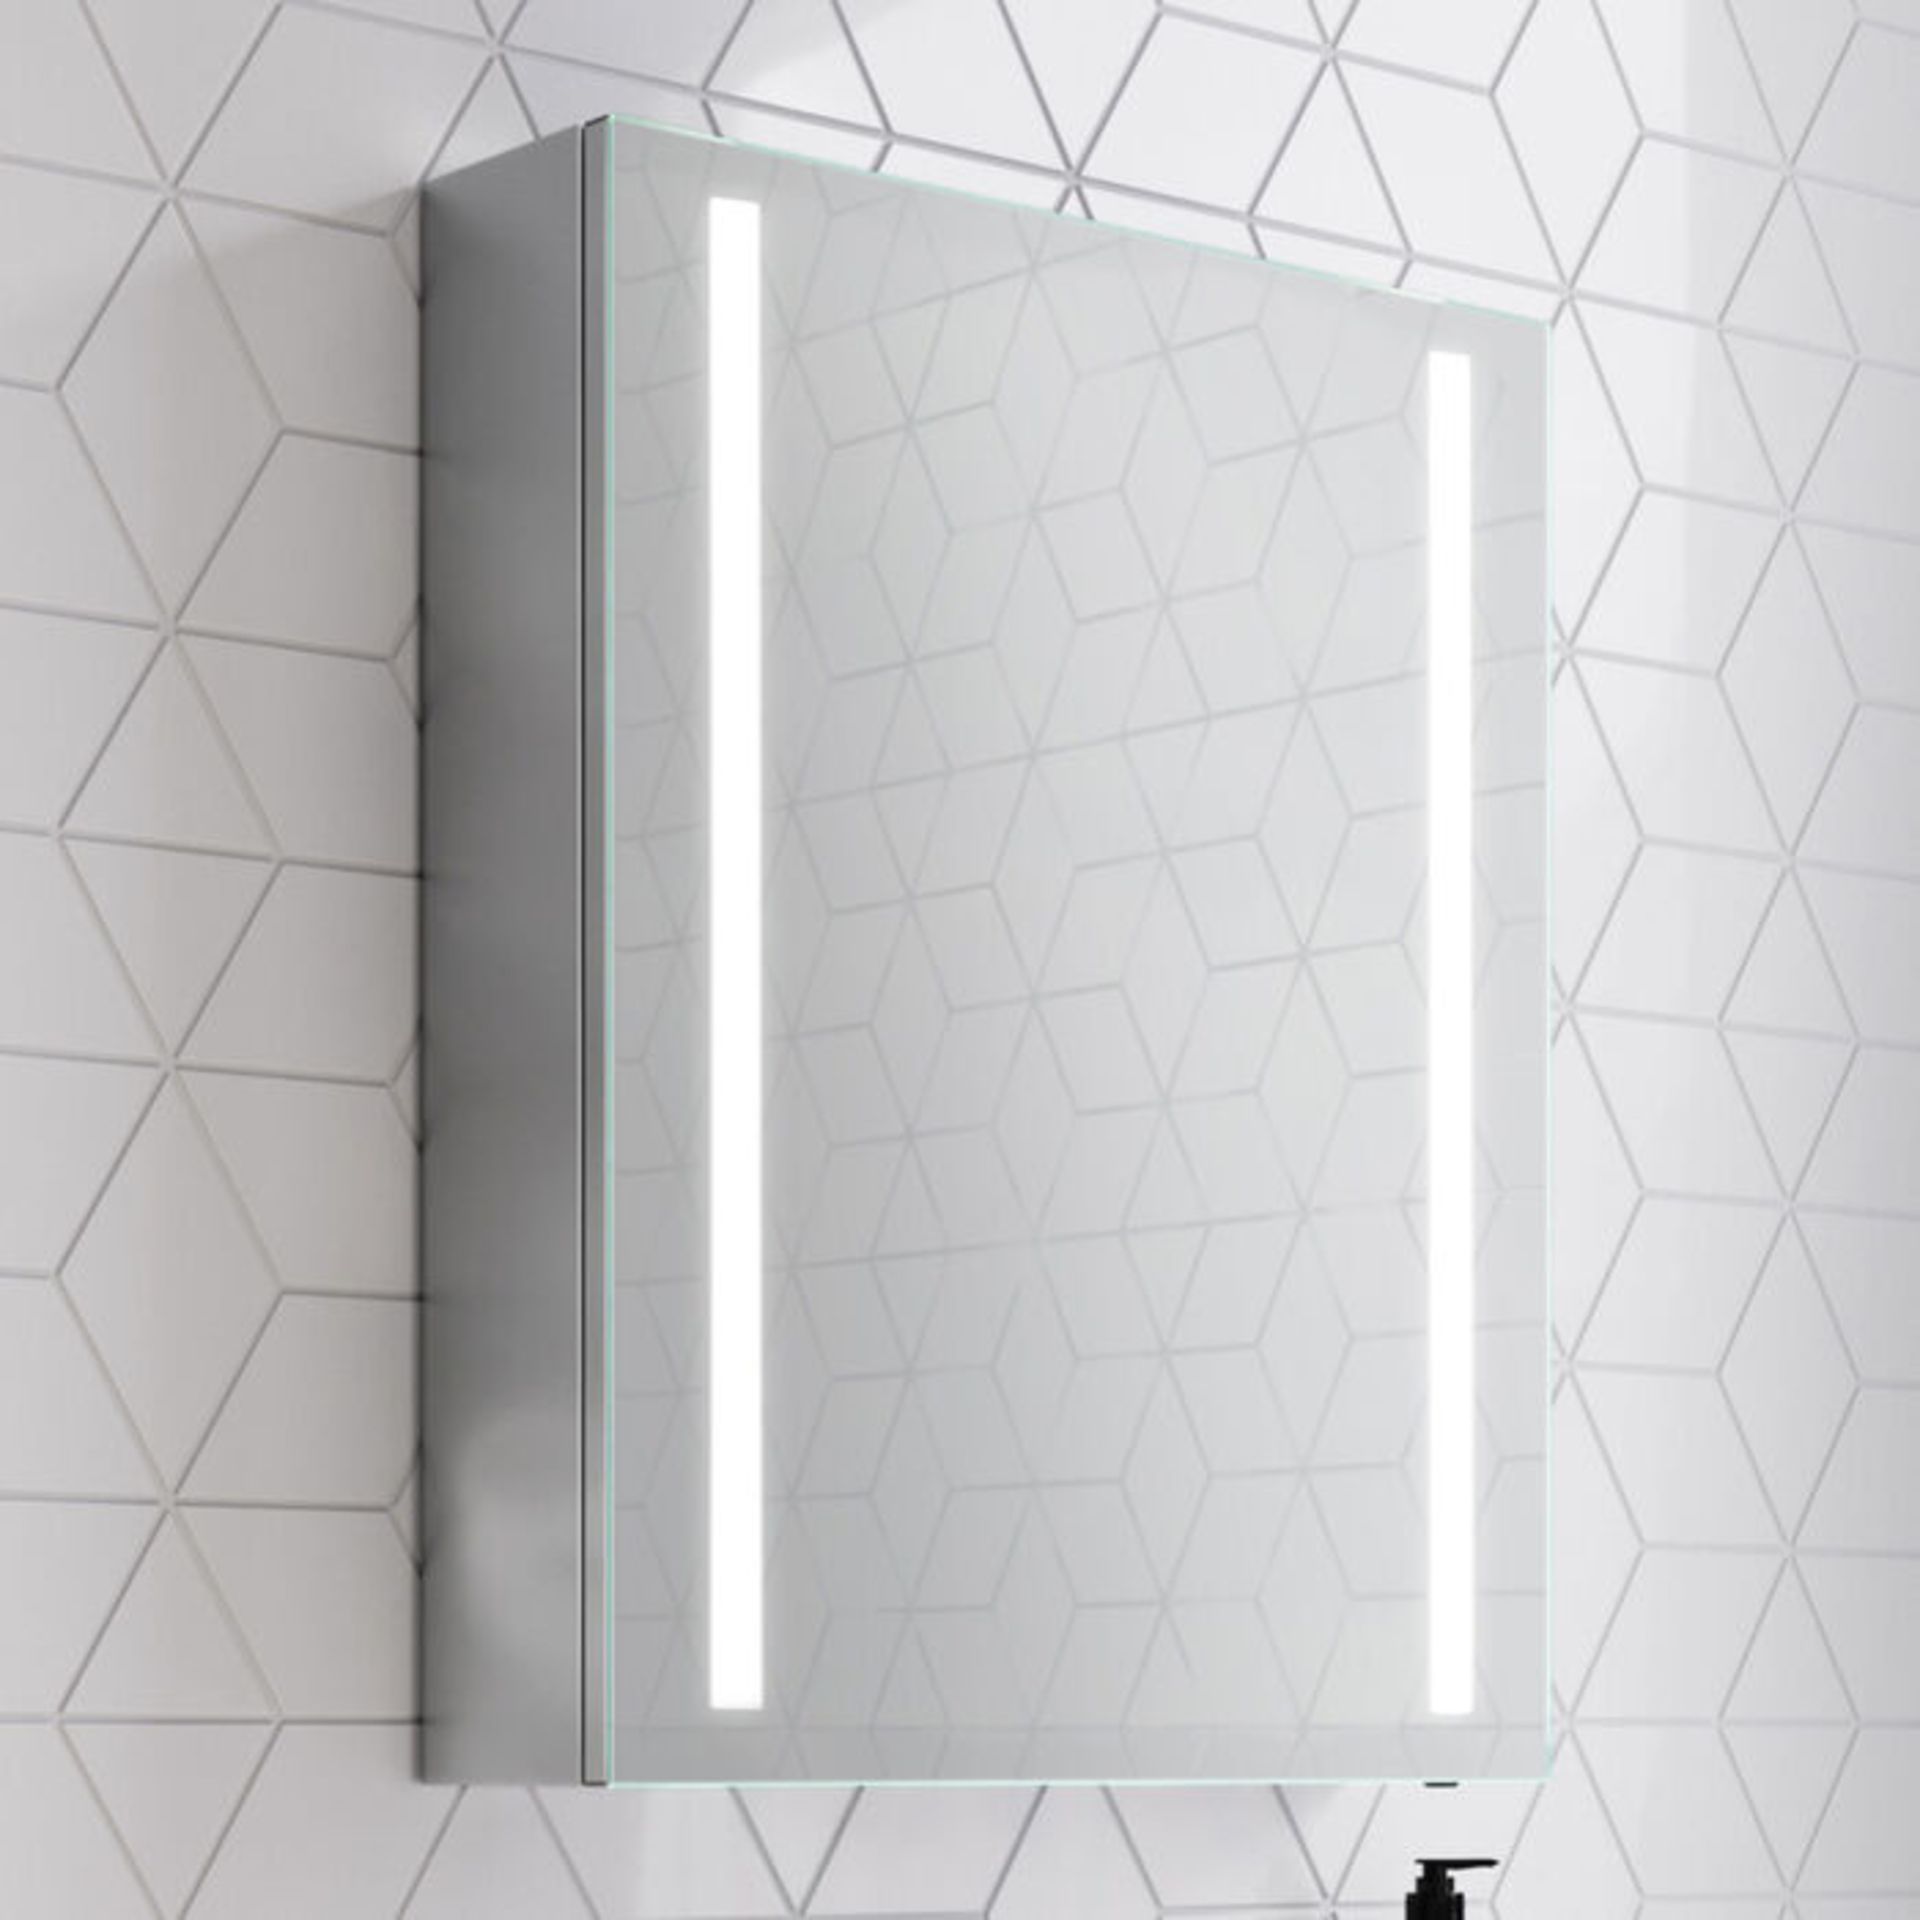 (RK2) 500x650mm Dawn Illuminated LED Mirror Cabinet. Energy efficient LED lighting, adding a c... - Image 2 of 5